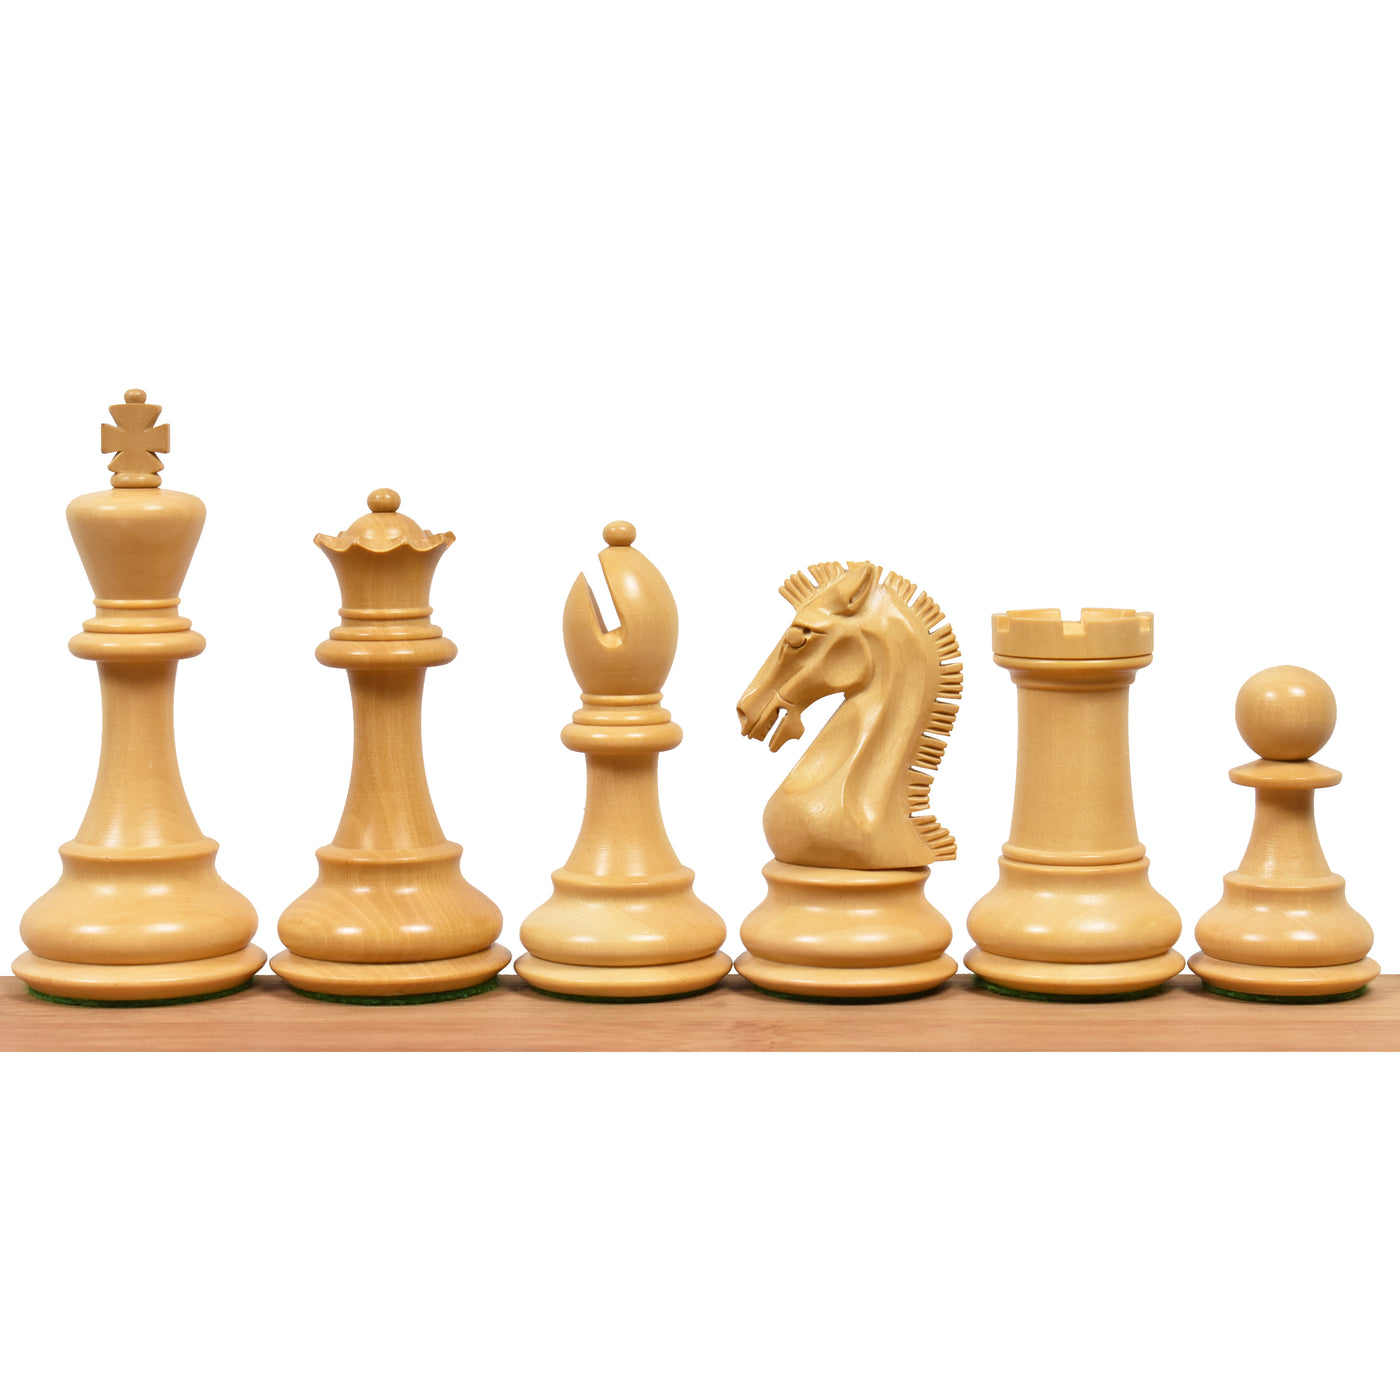 Craftsman Knight Staunton Chess Pieces Only set